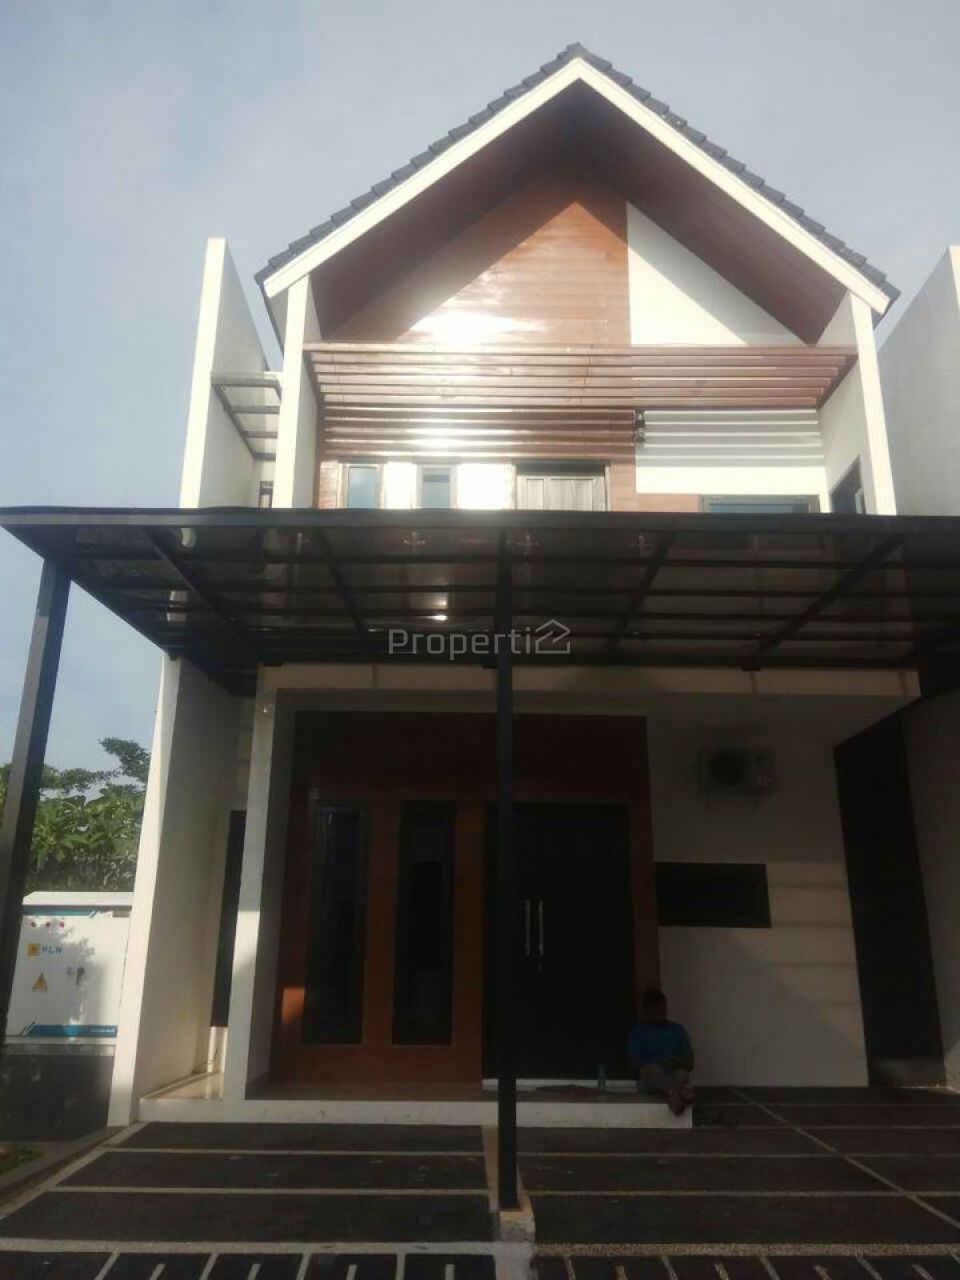 Townhouse Baru di Jatiwaringin, Kota Bekasi, Jawa Barat